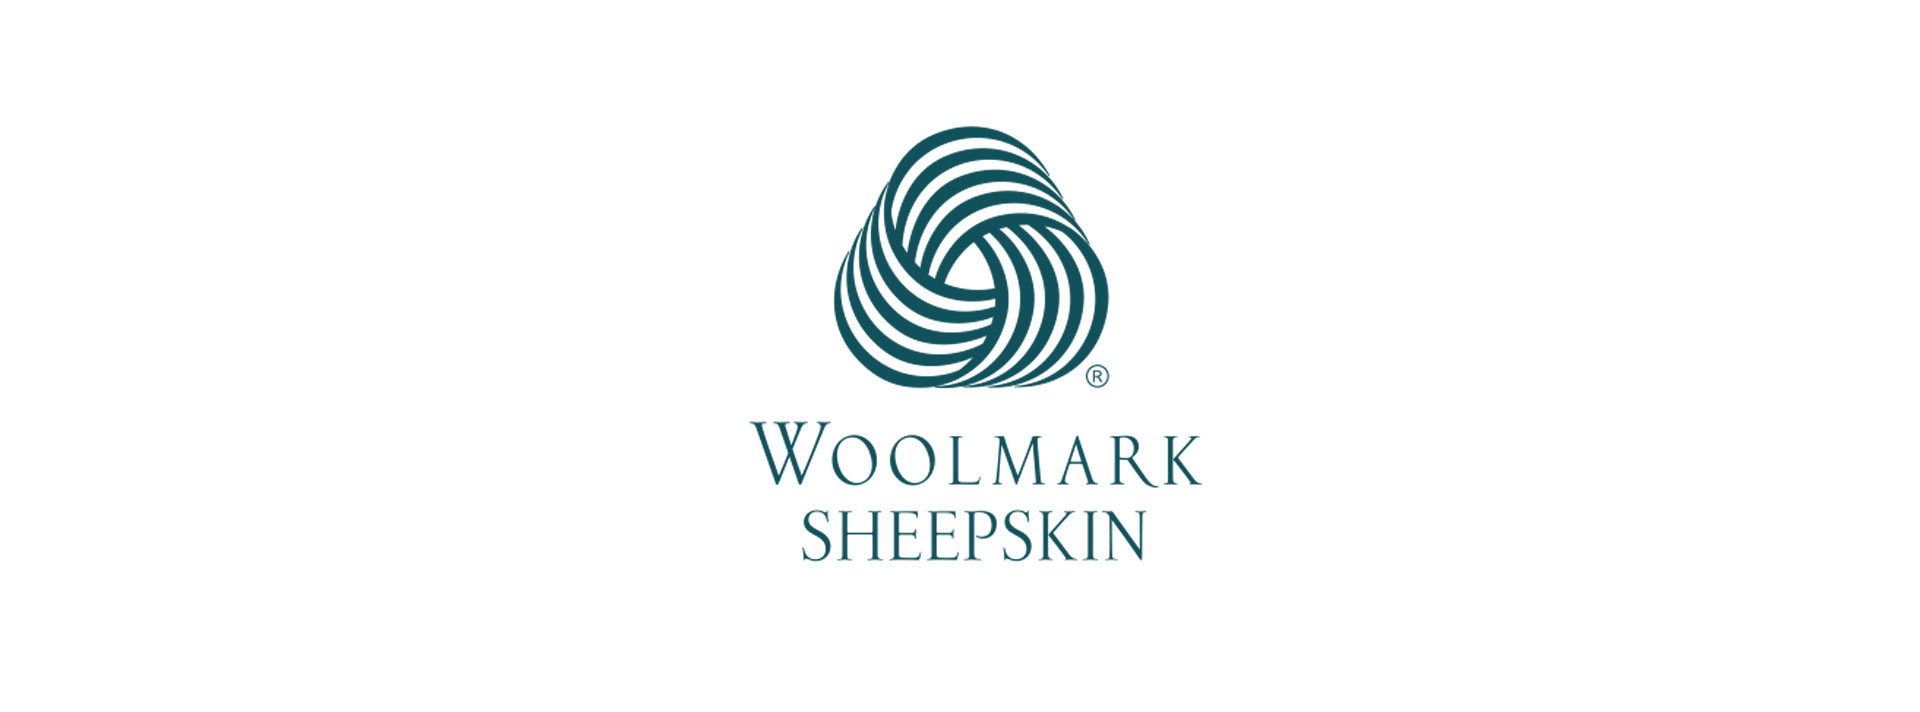 Accredited Woolmark Sheepskin logo